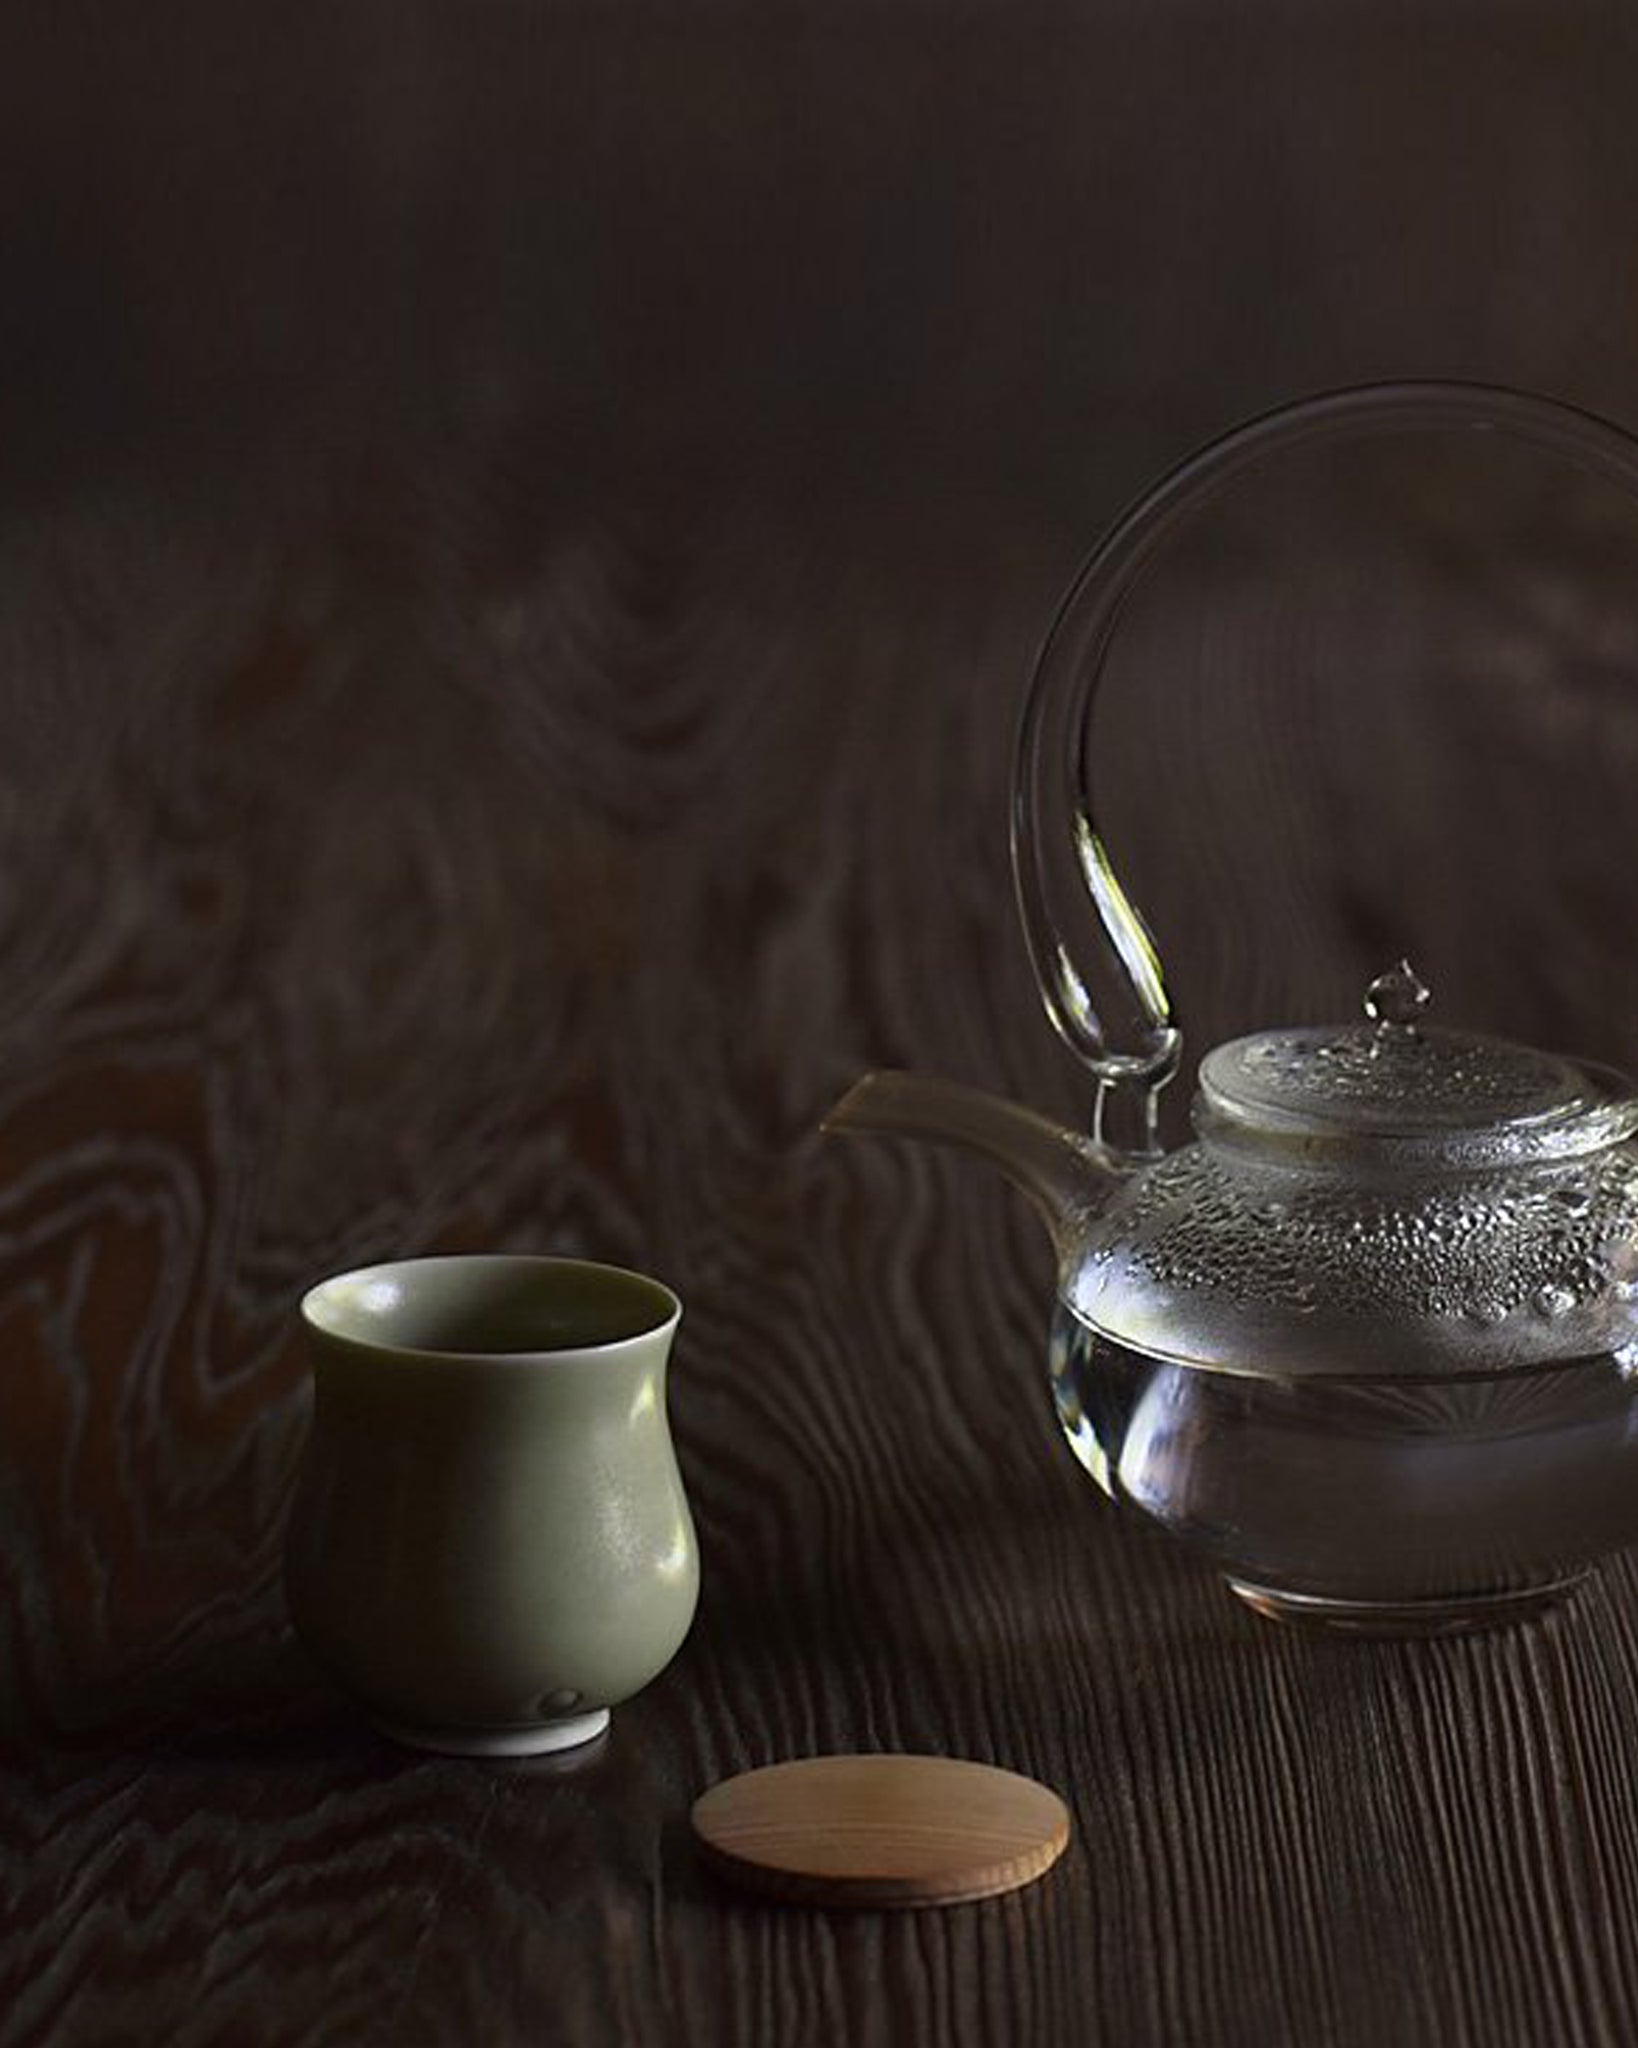 Gourd Teacup by Simplicity beside a glass teapot